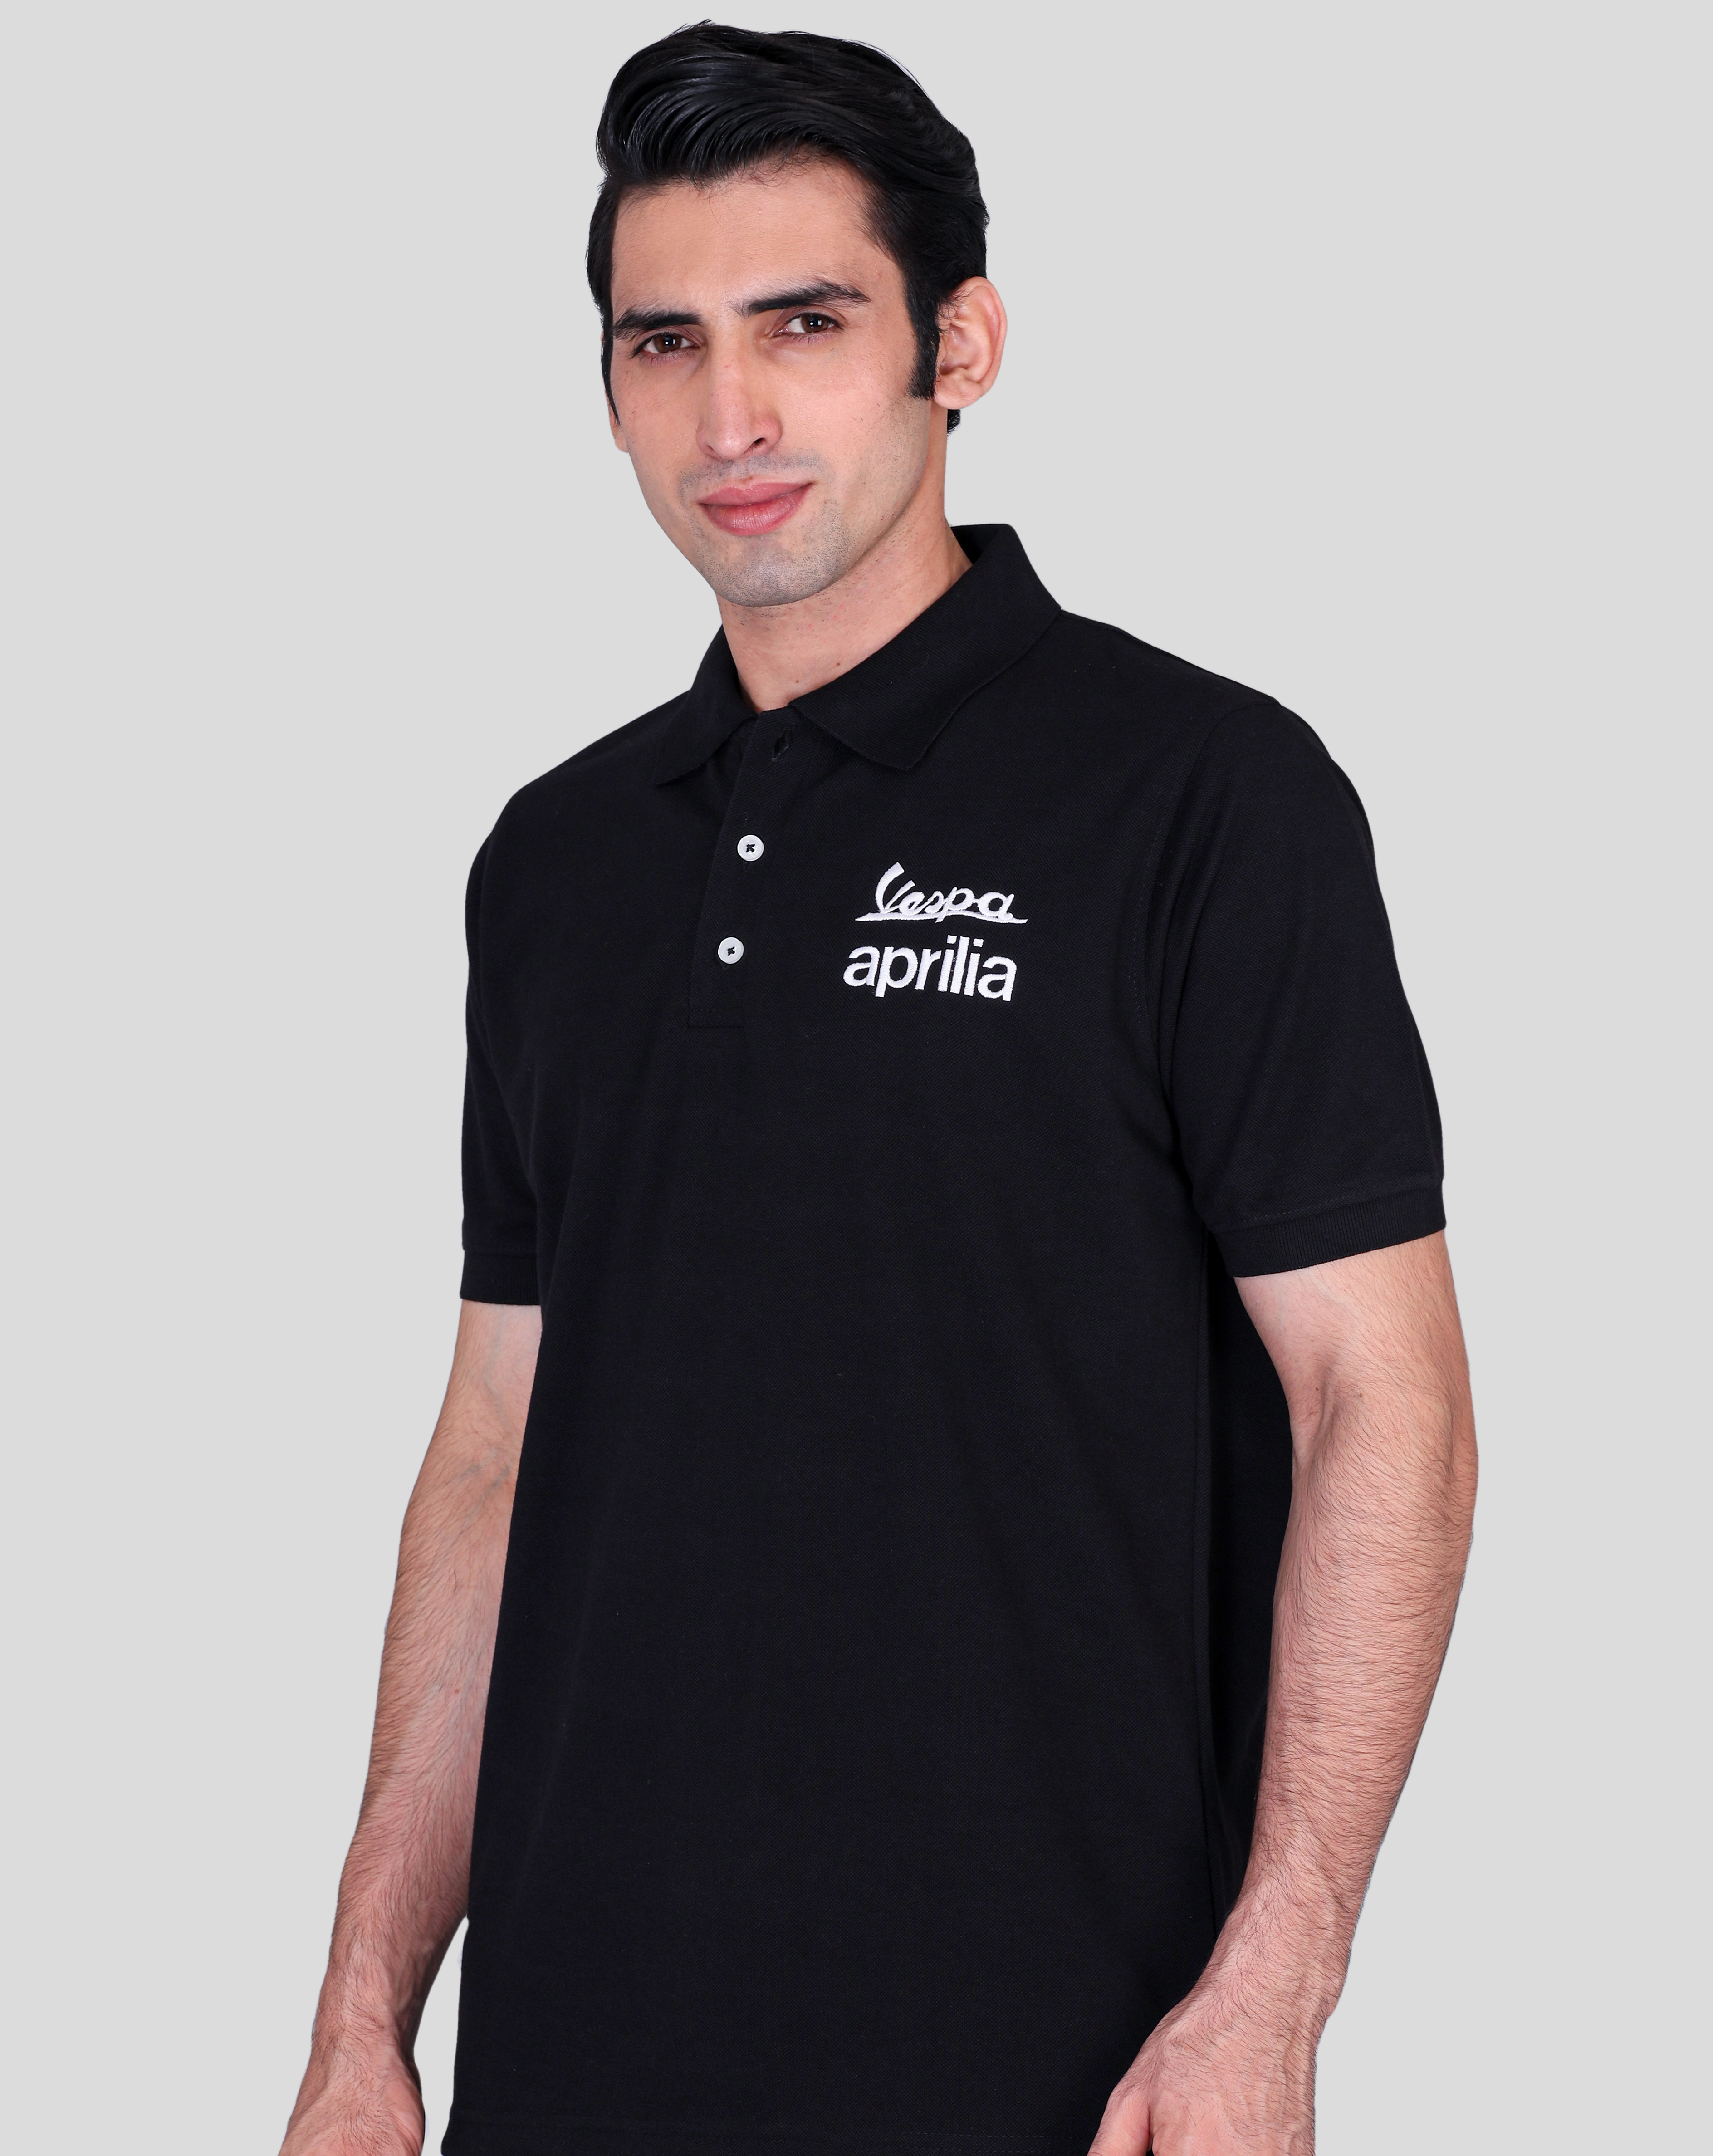 Vespa black polo t-shirts with company logo